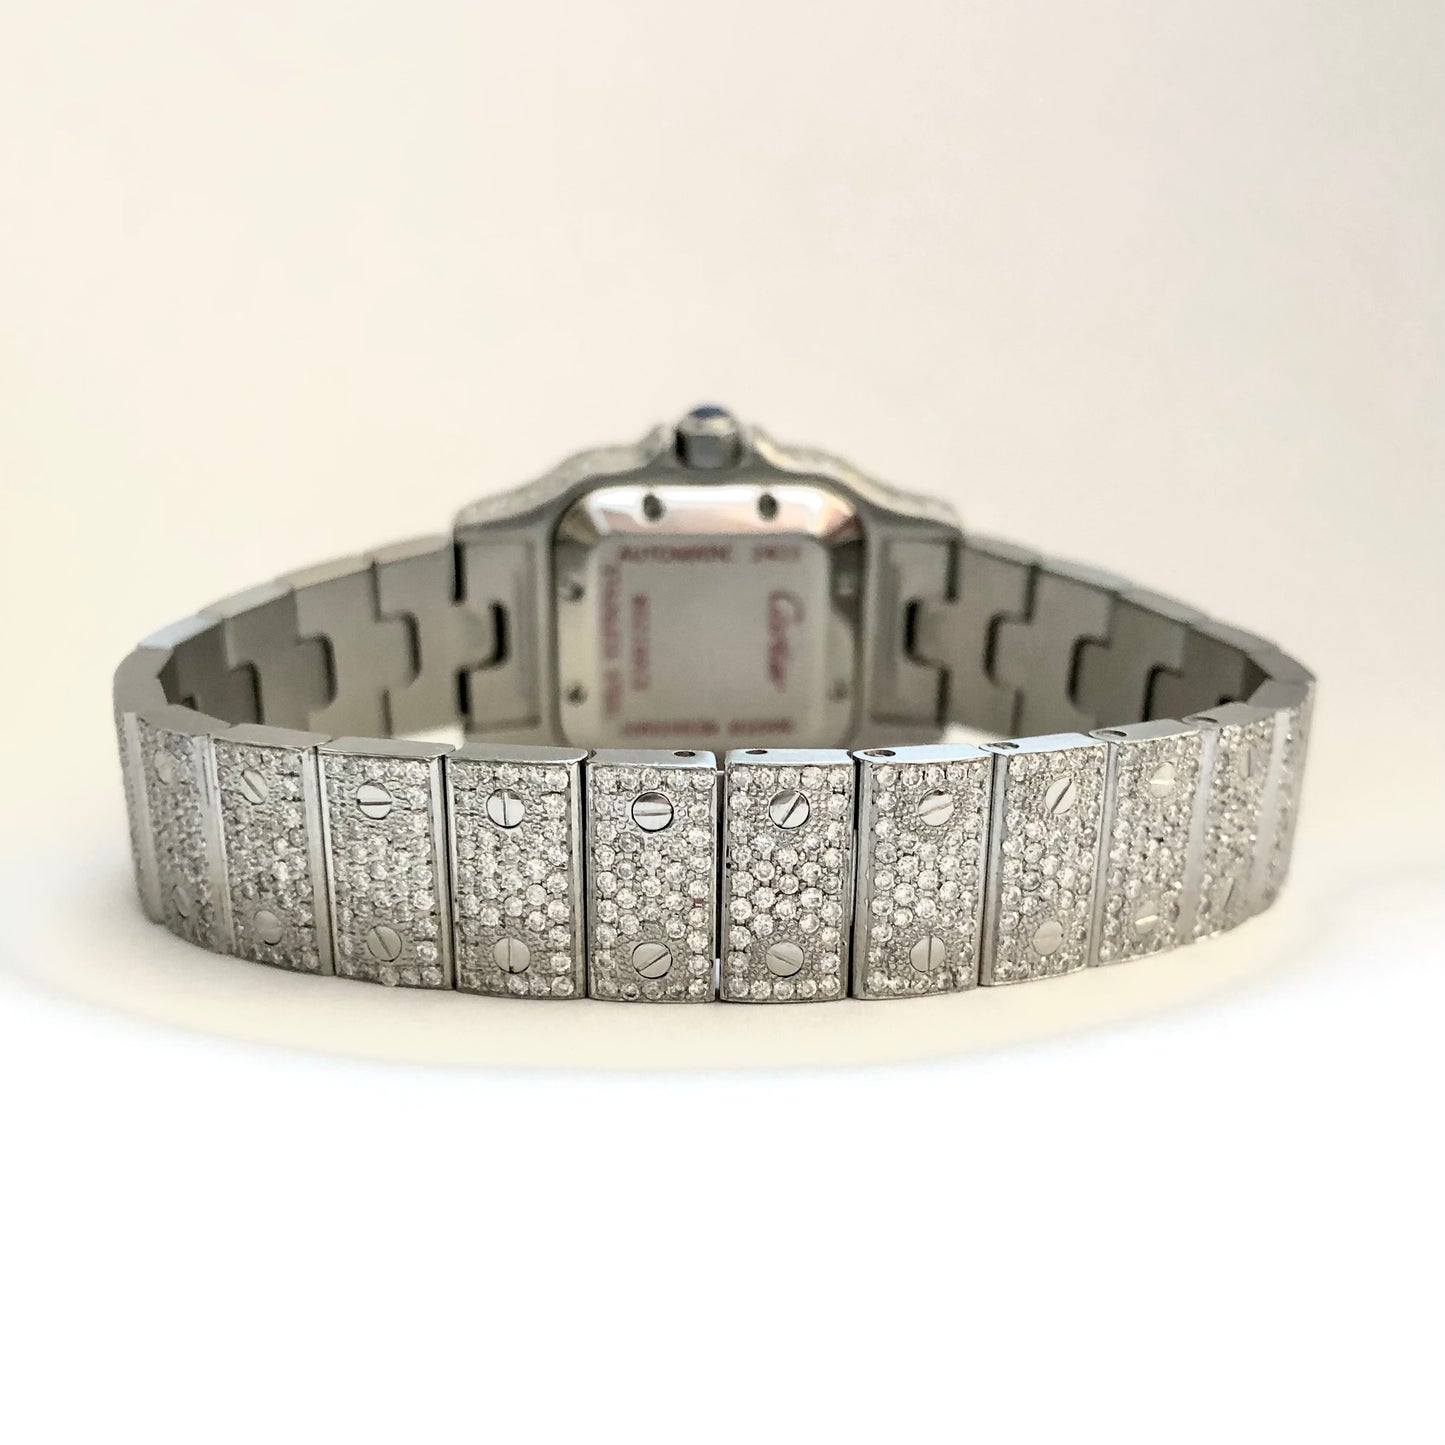 CARTIER SANTOS GALBEE 24mm Automatic Steel Diamond Watch ~8TCW NEW Model